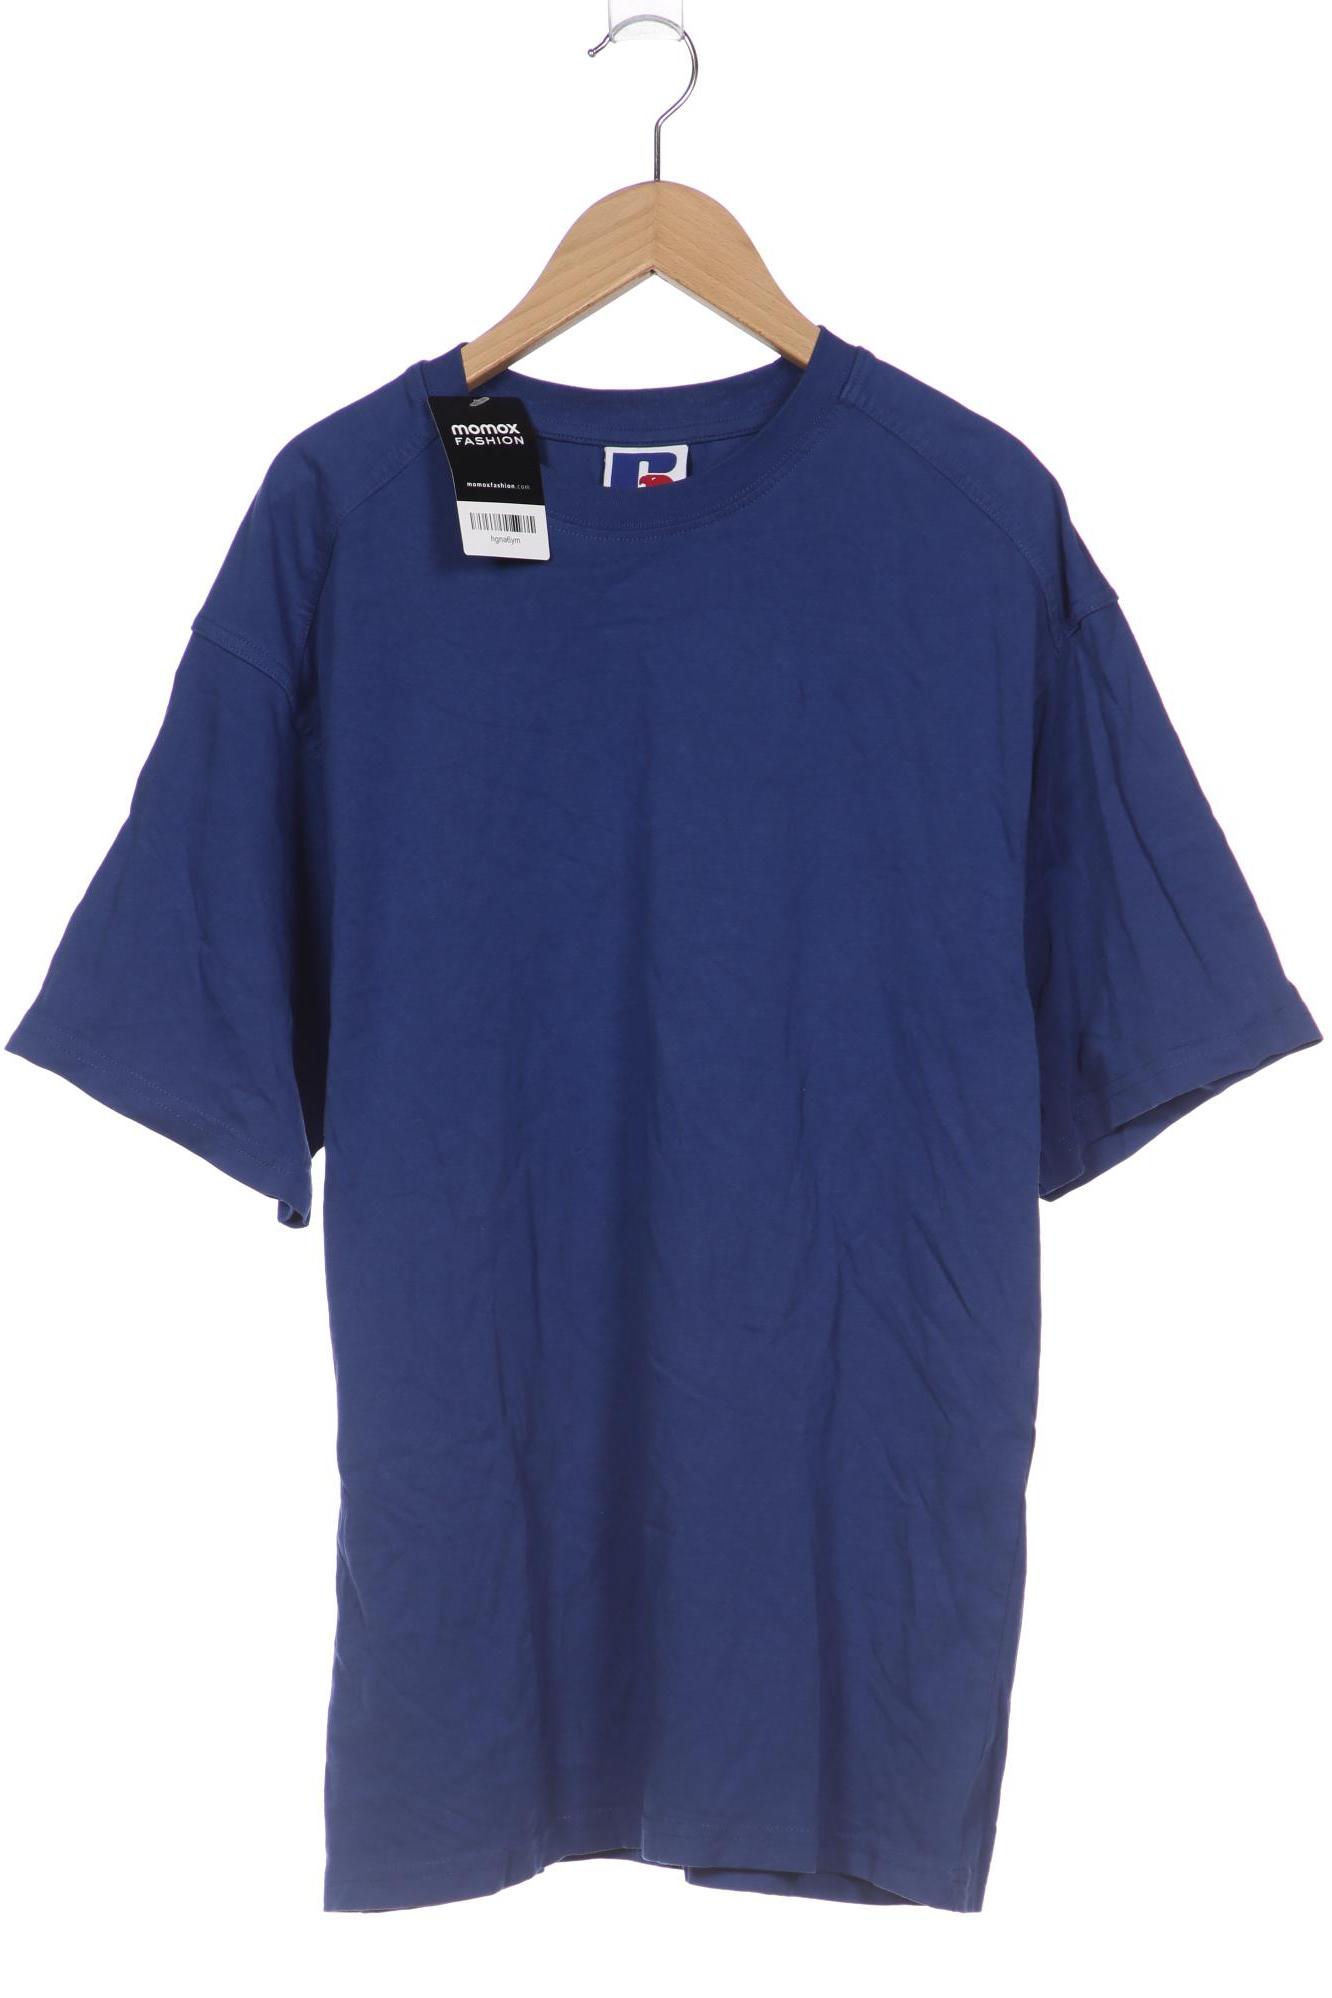 Russell Athletic Herren T-Shirt, marineblau von Russell Athletic